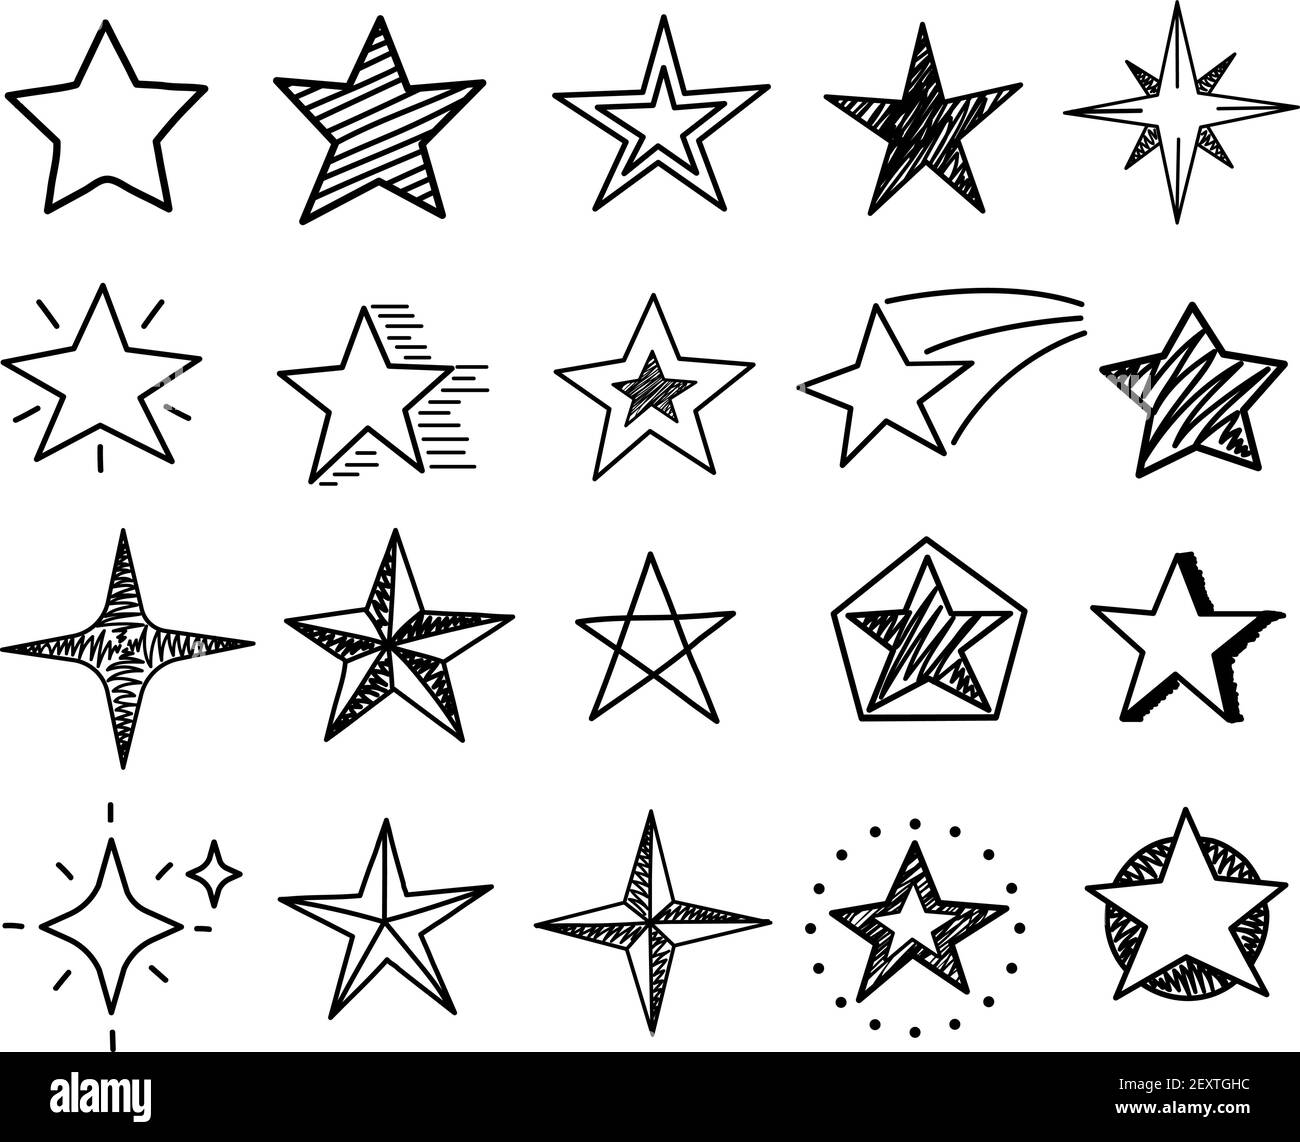 Sketch stars. Cute star shapes, black starburst doodle signs for ...